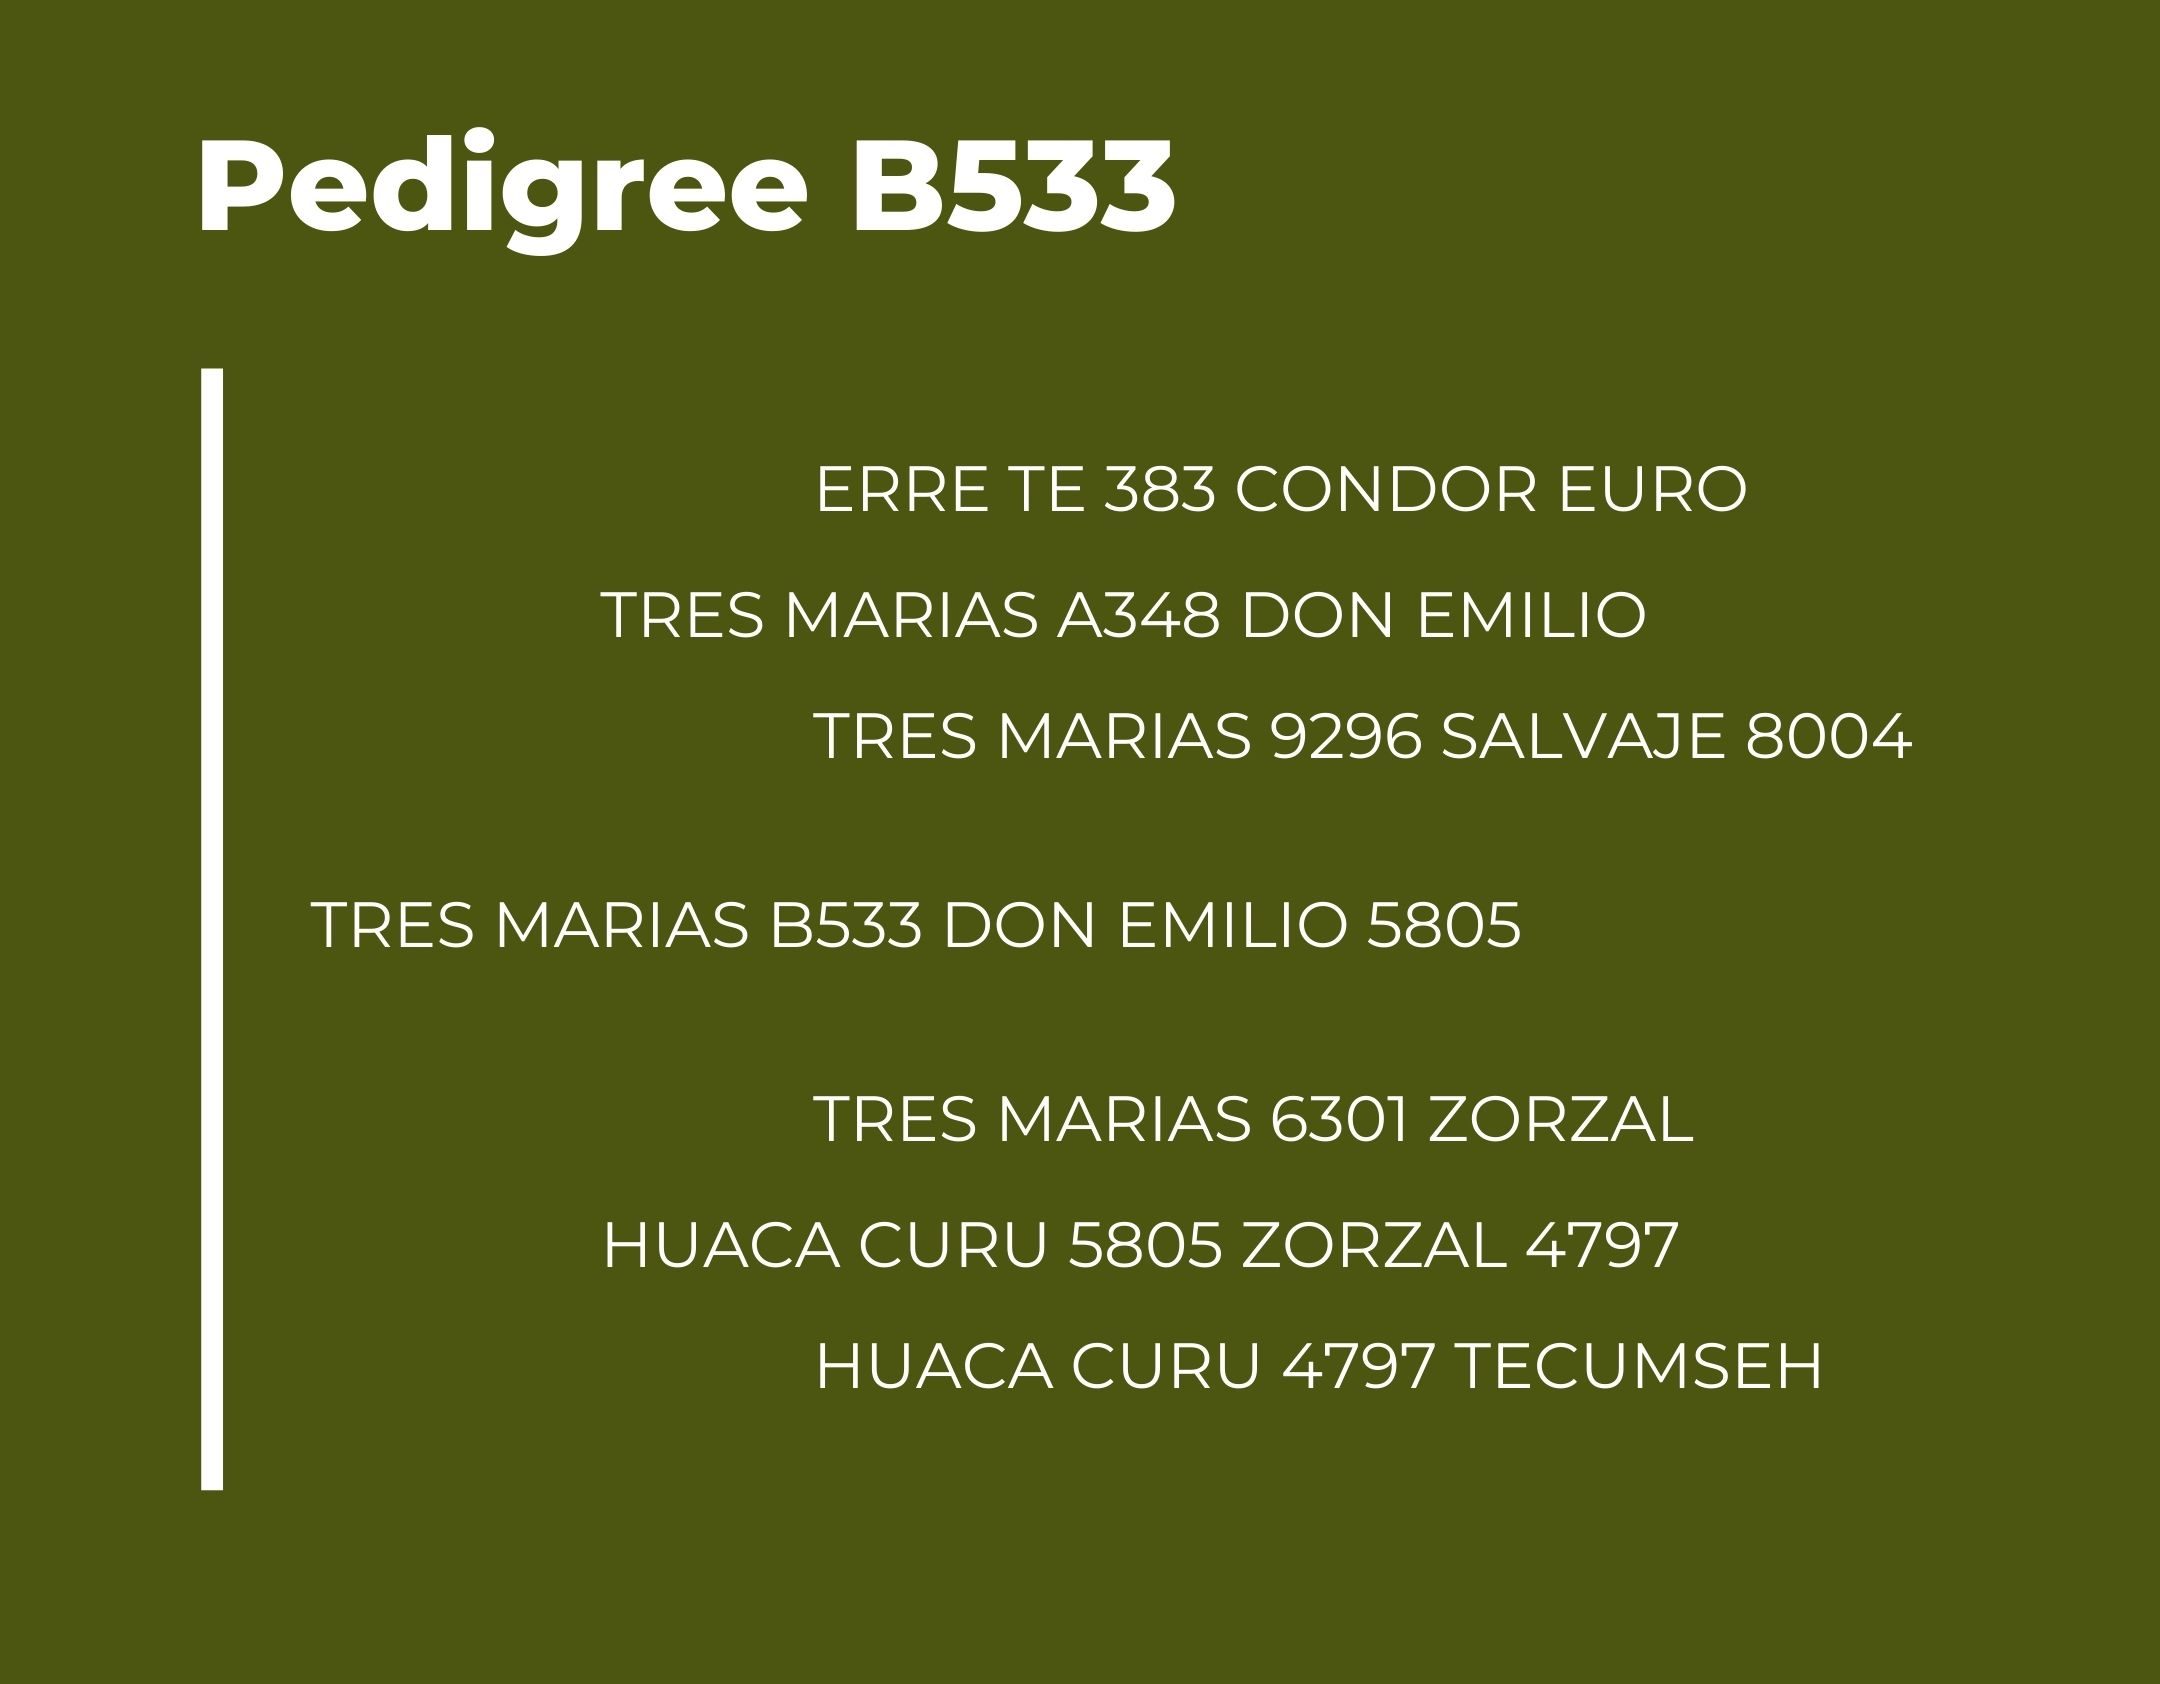 Catalogo Tres Marias Pedigree B533